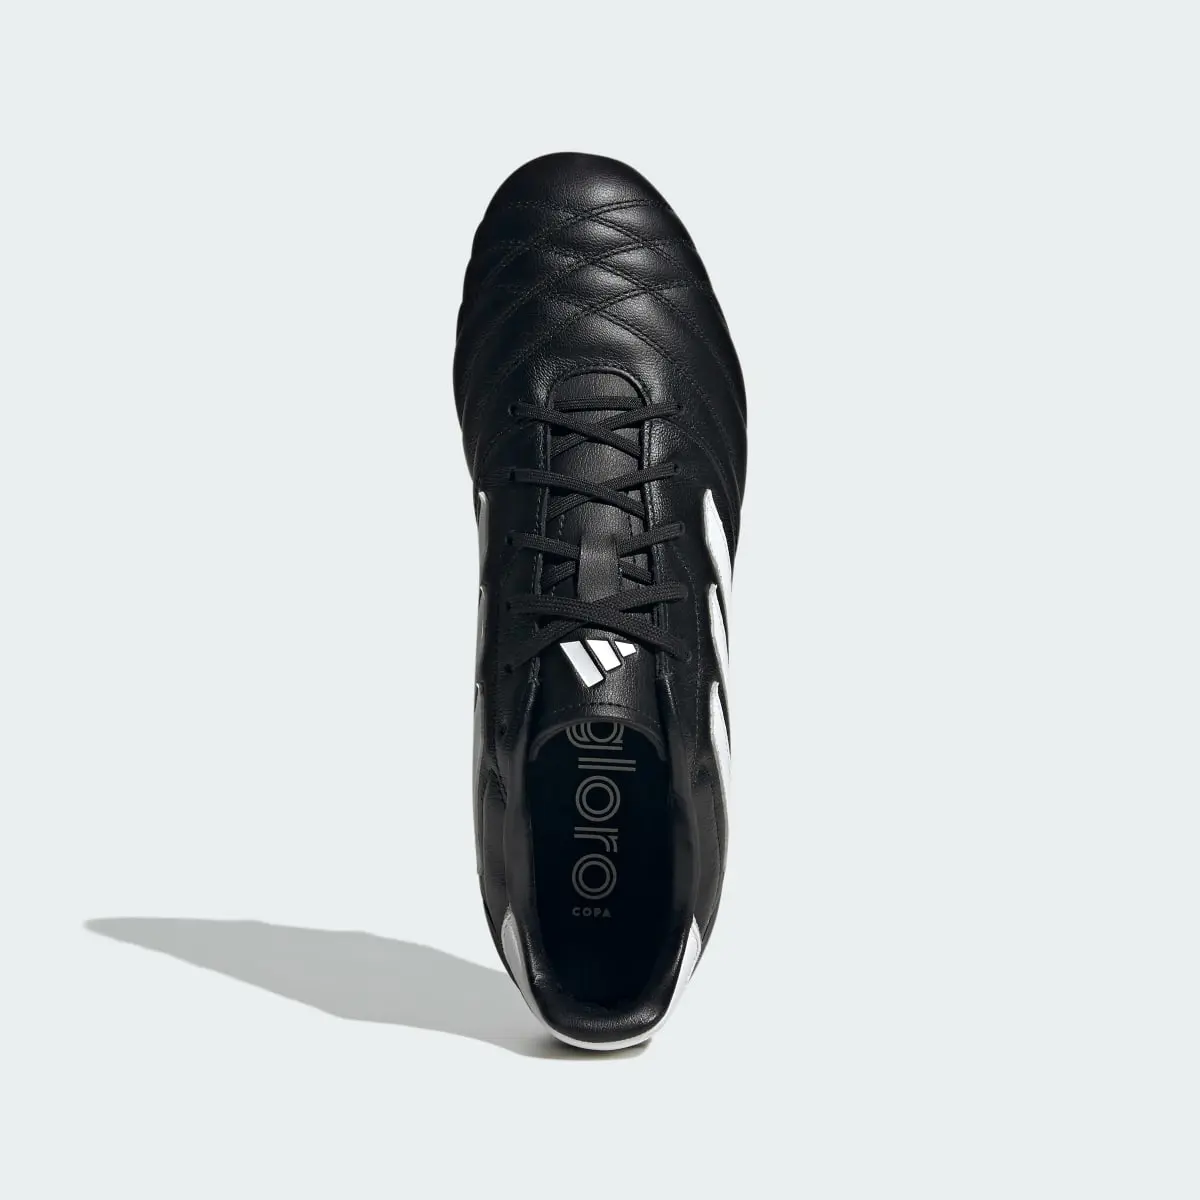 Adidas Copa Gloro Firm Ground Boots. 3